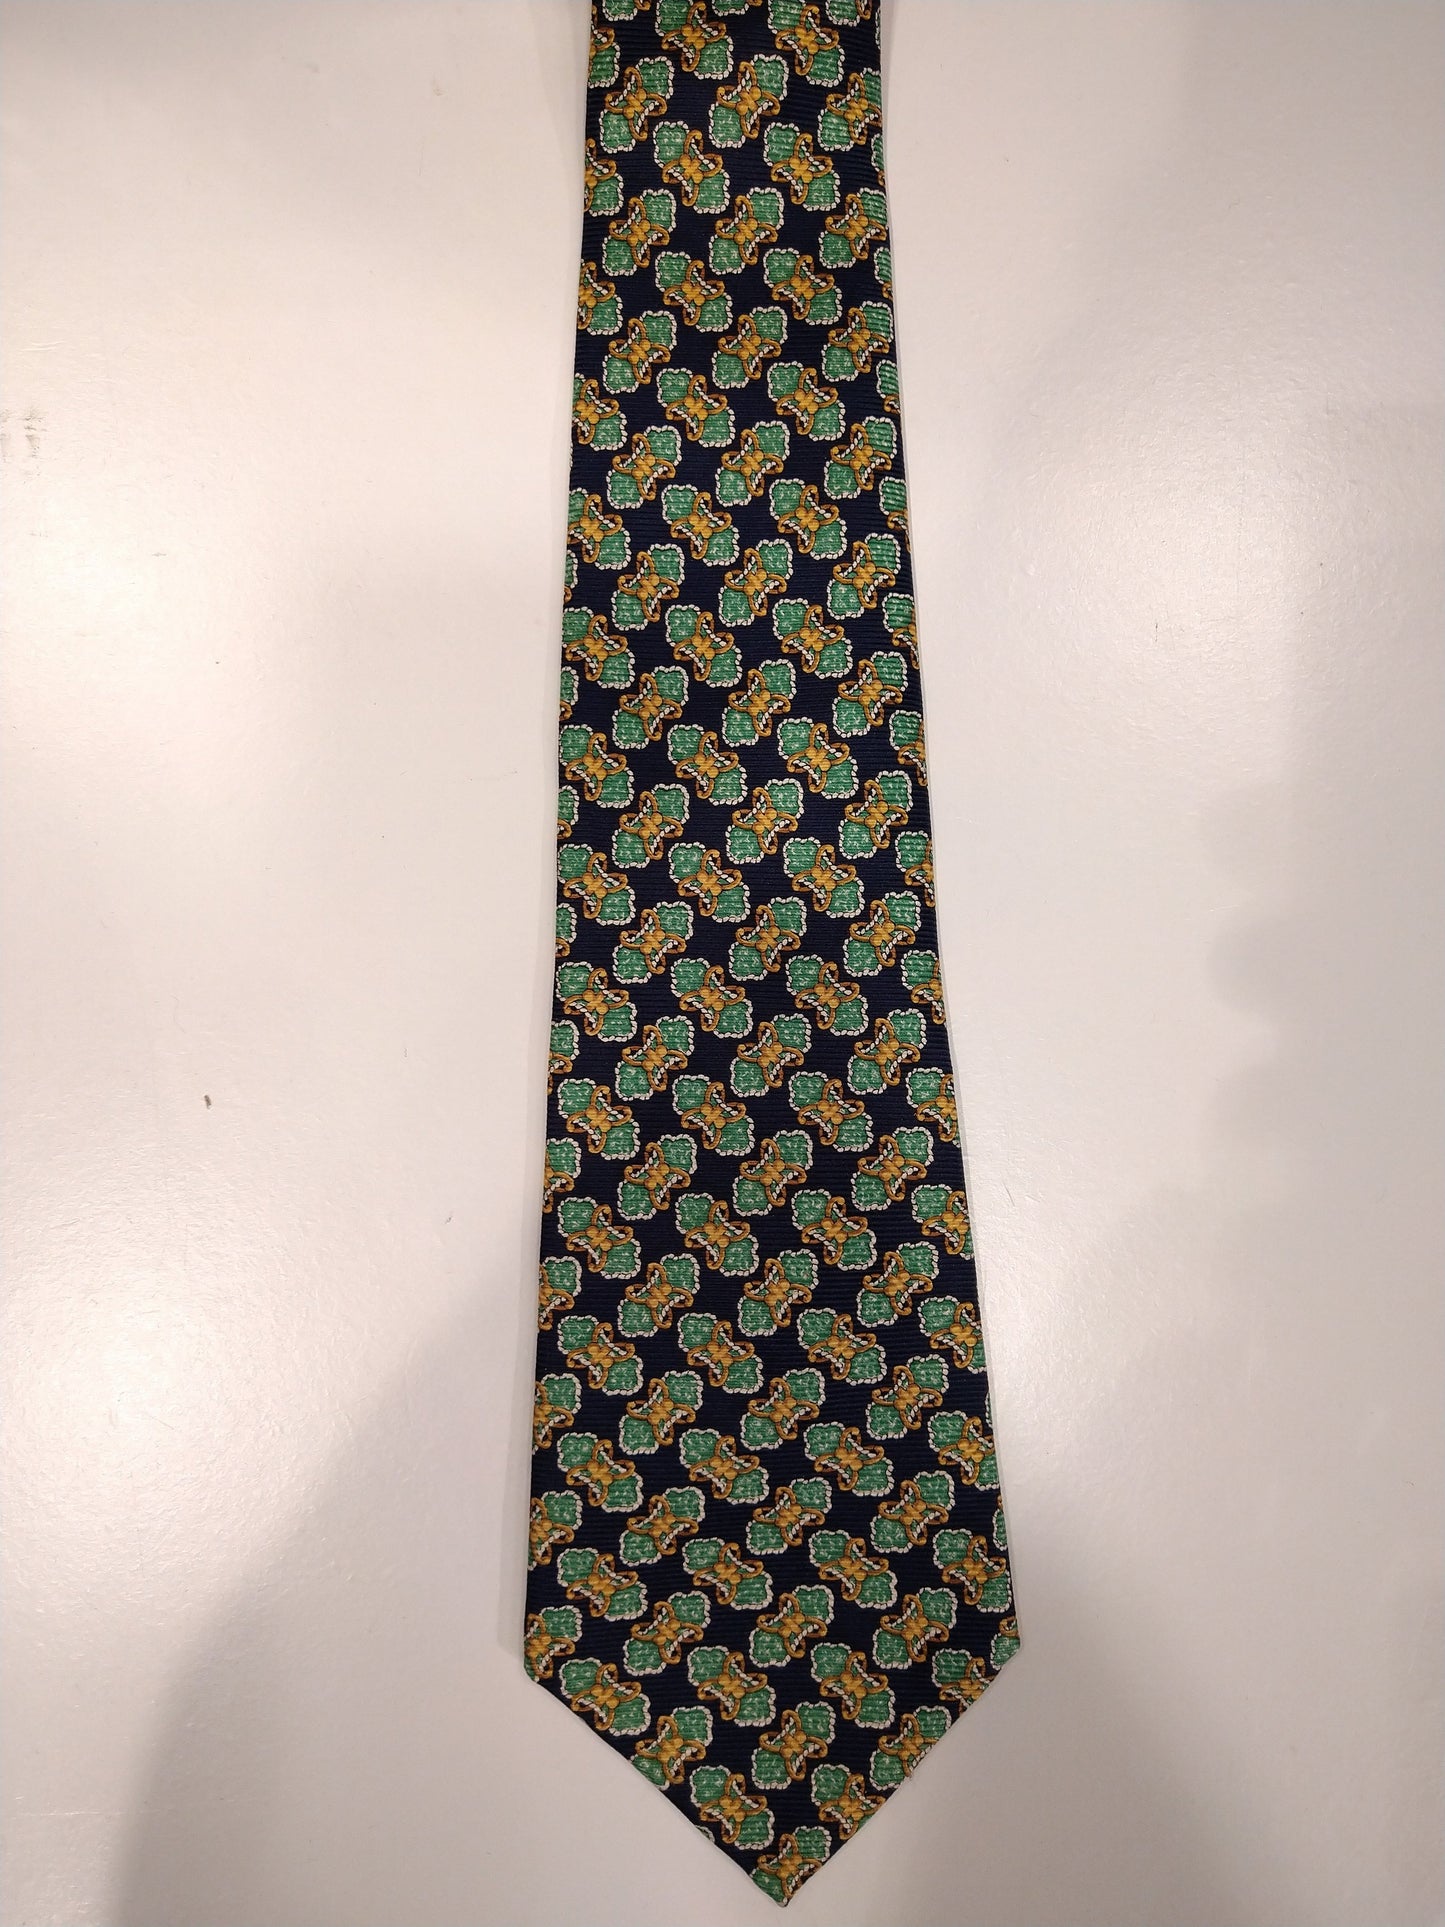 Celine Paris silk tie. Green blue yellow motif.